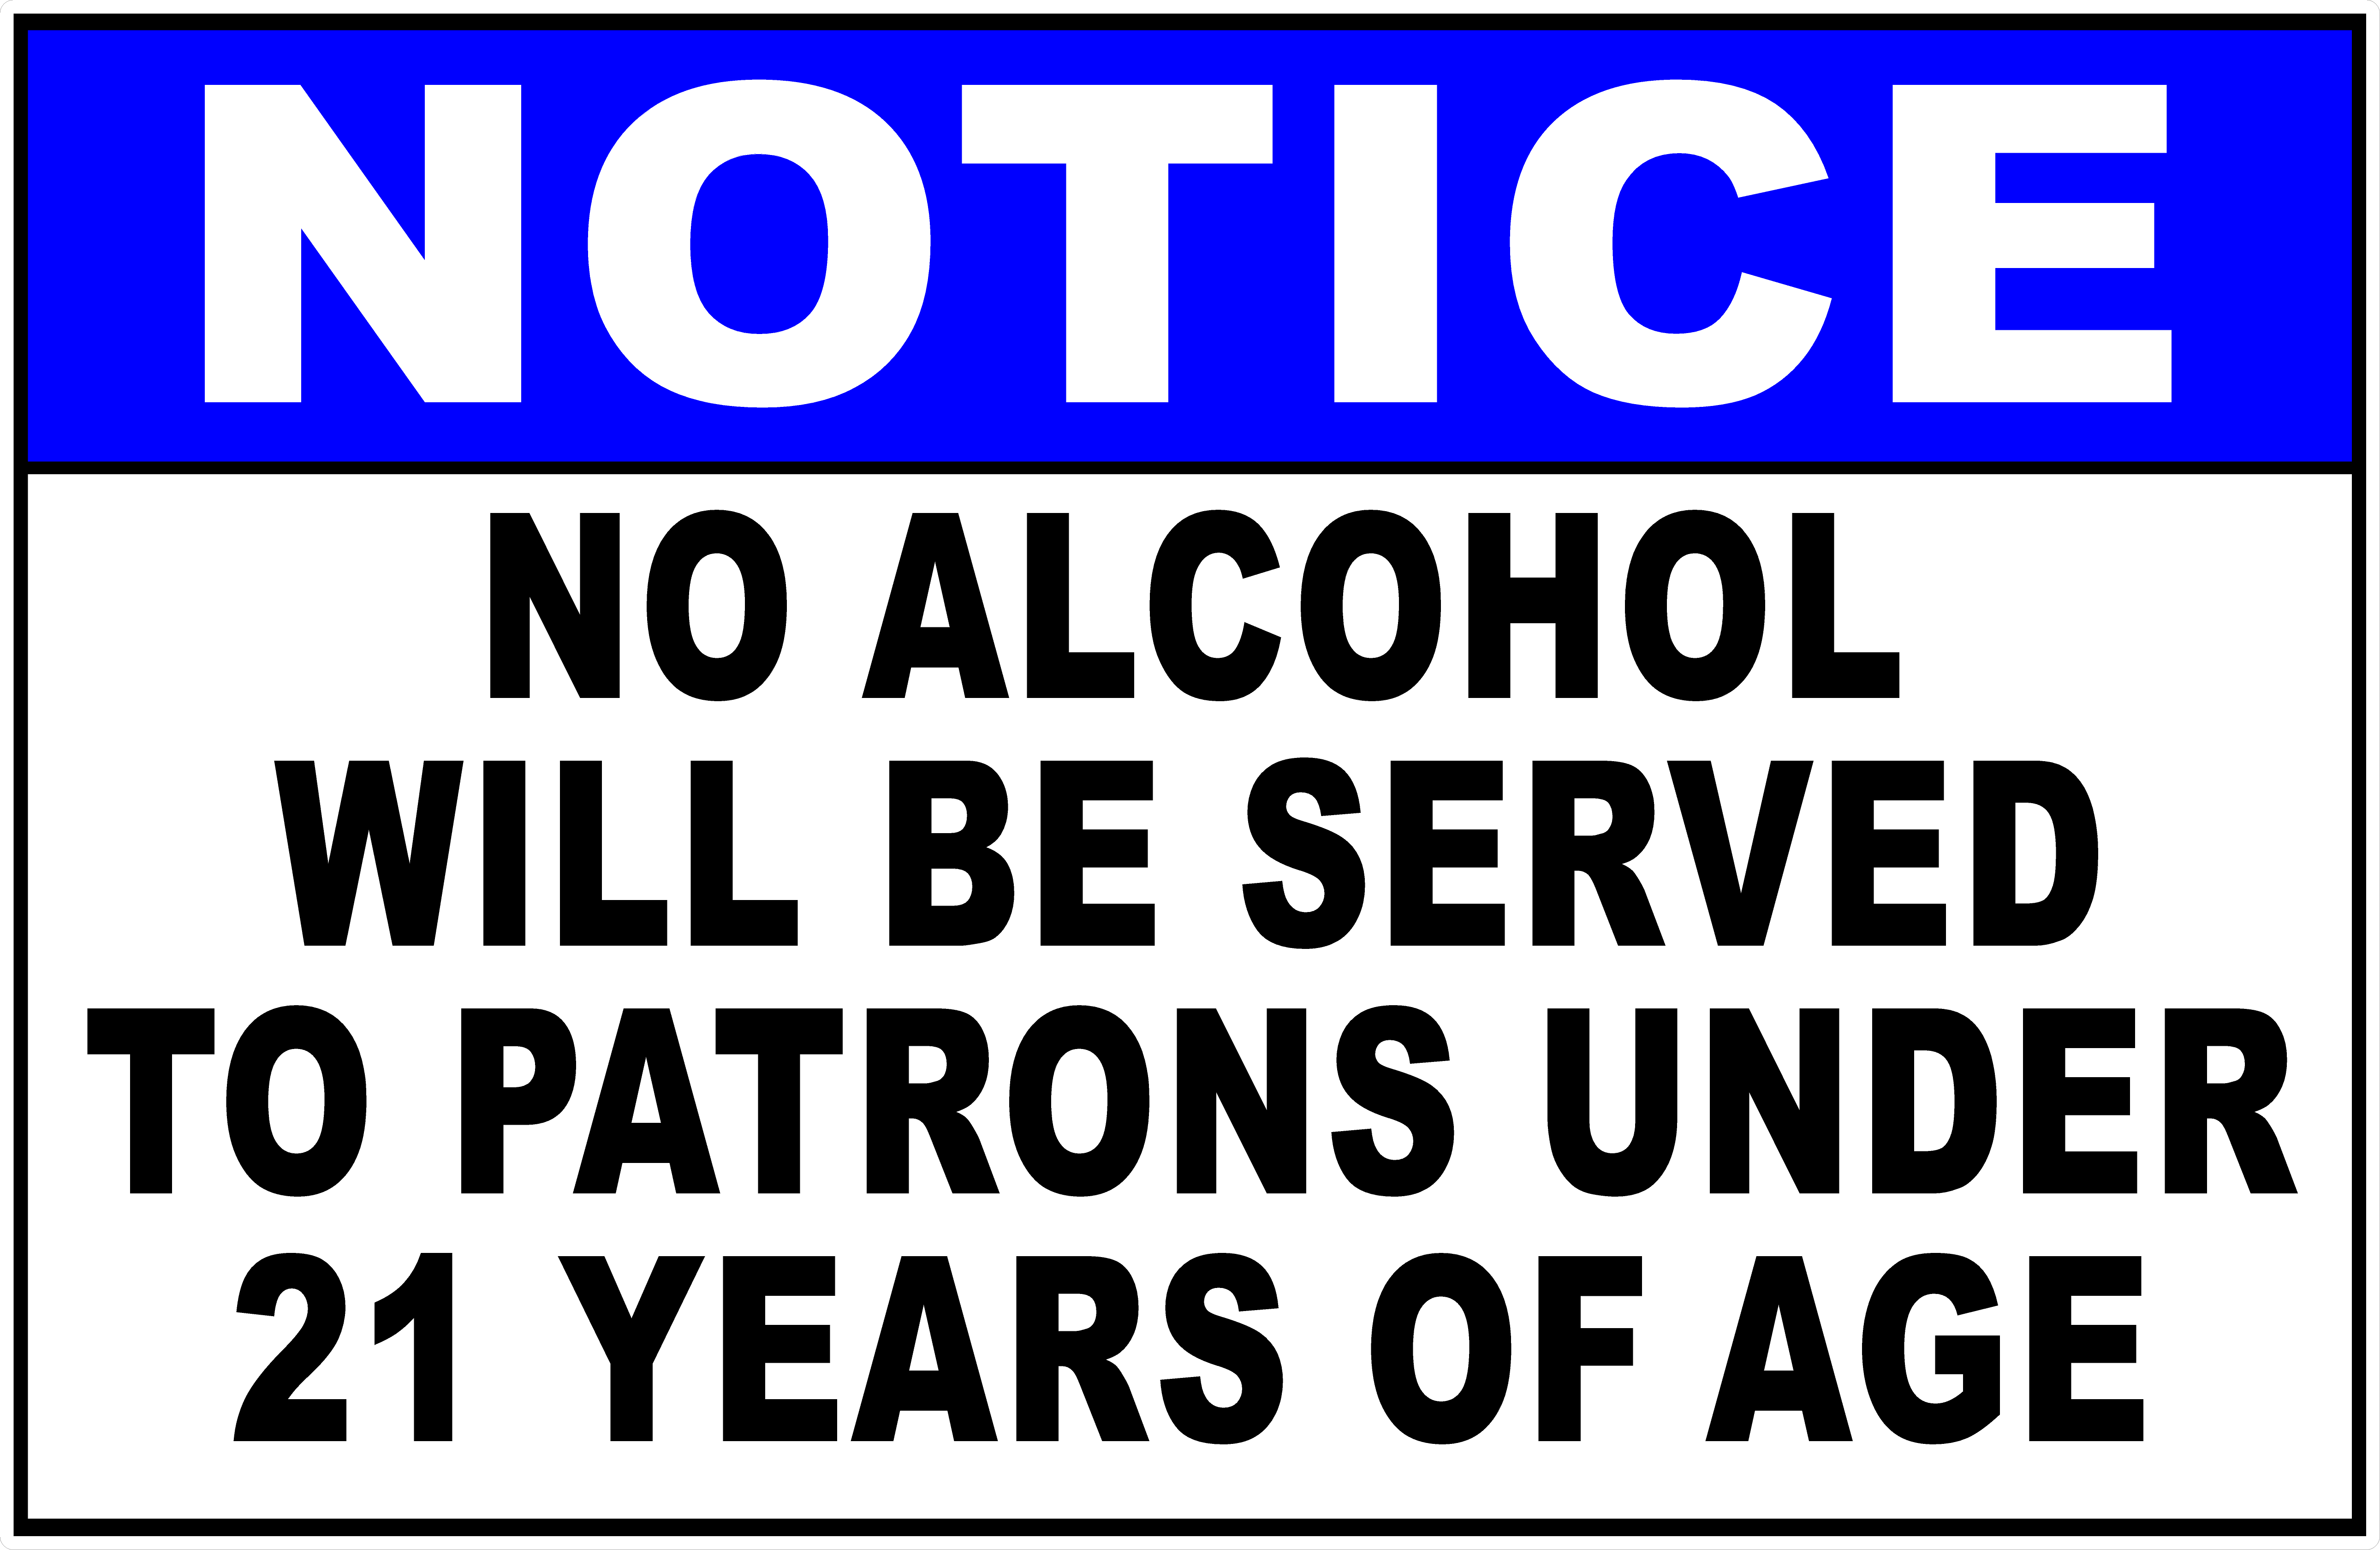 no drinking under 21 signs